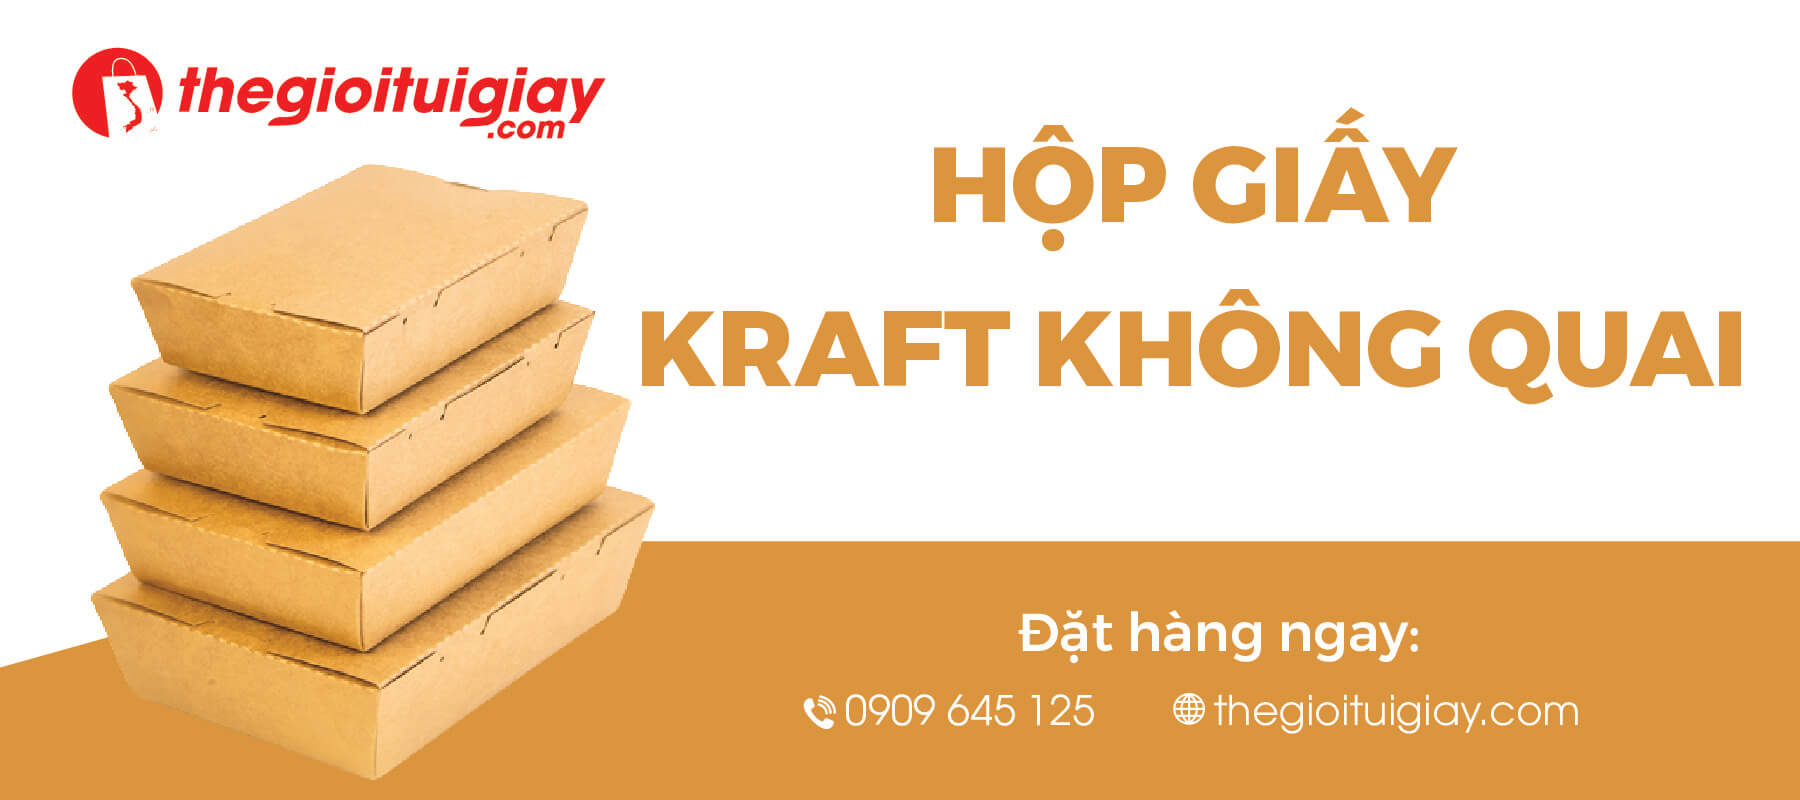 banner-hop-giay-kraft-khong-quai